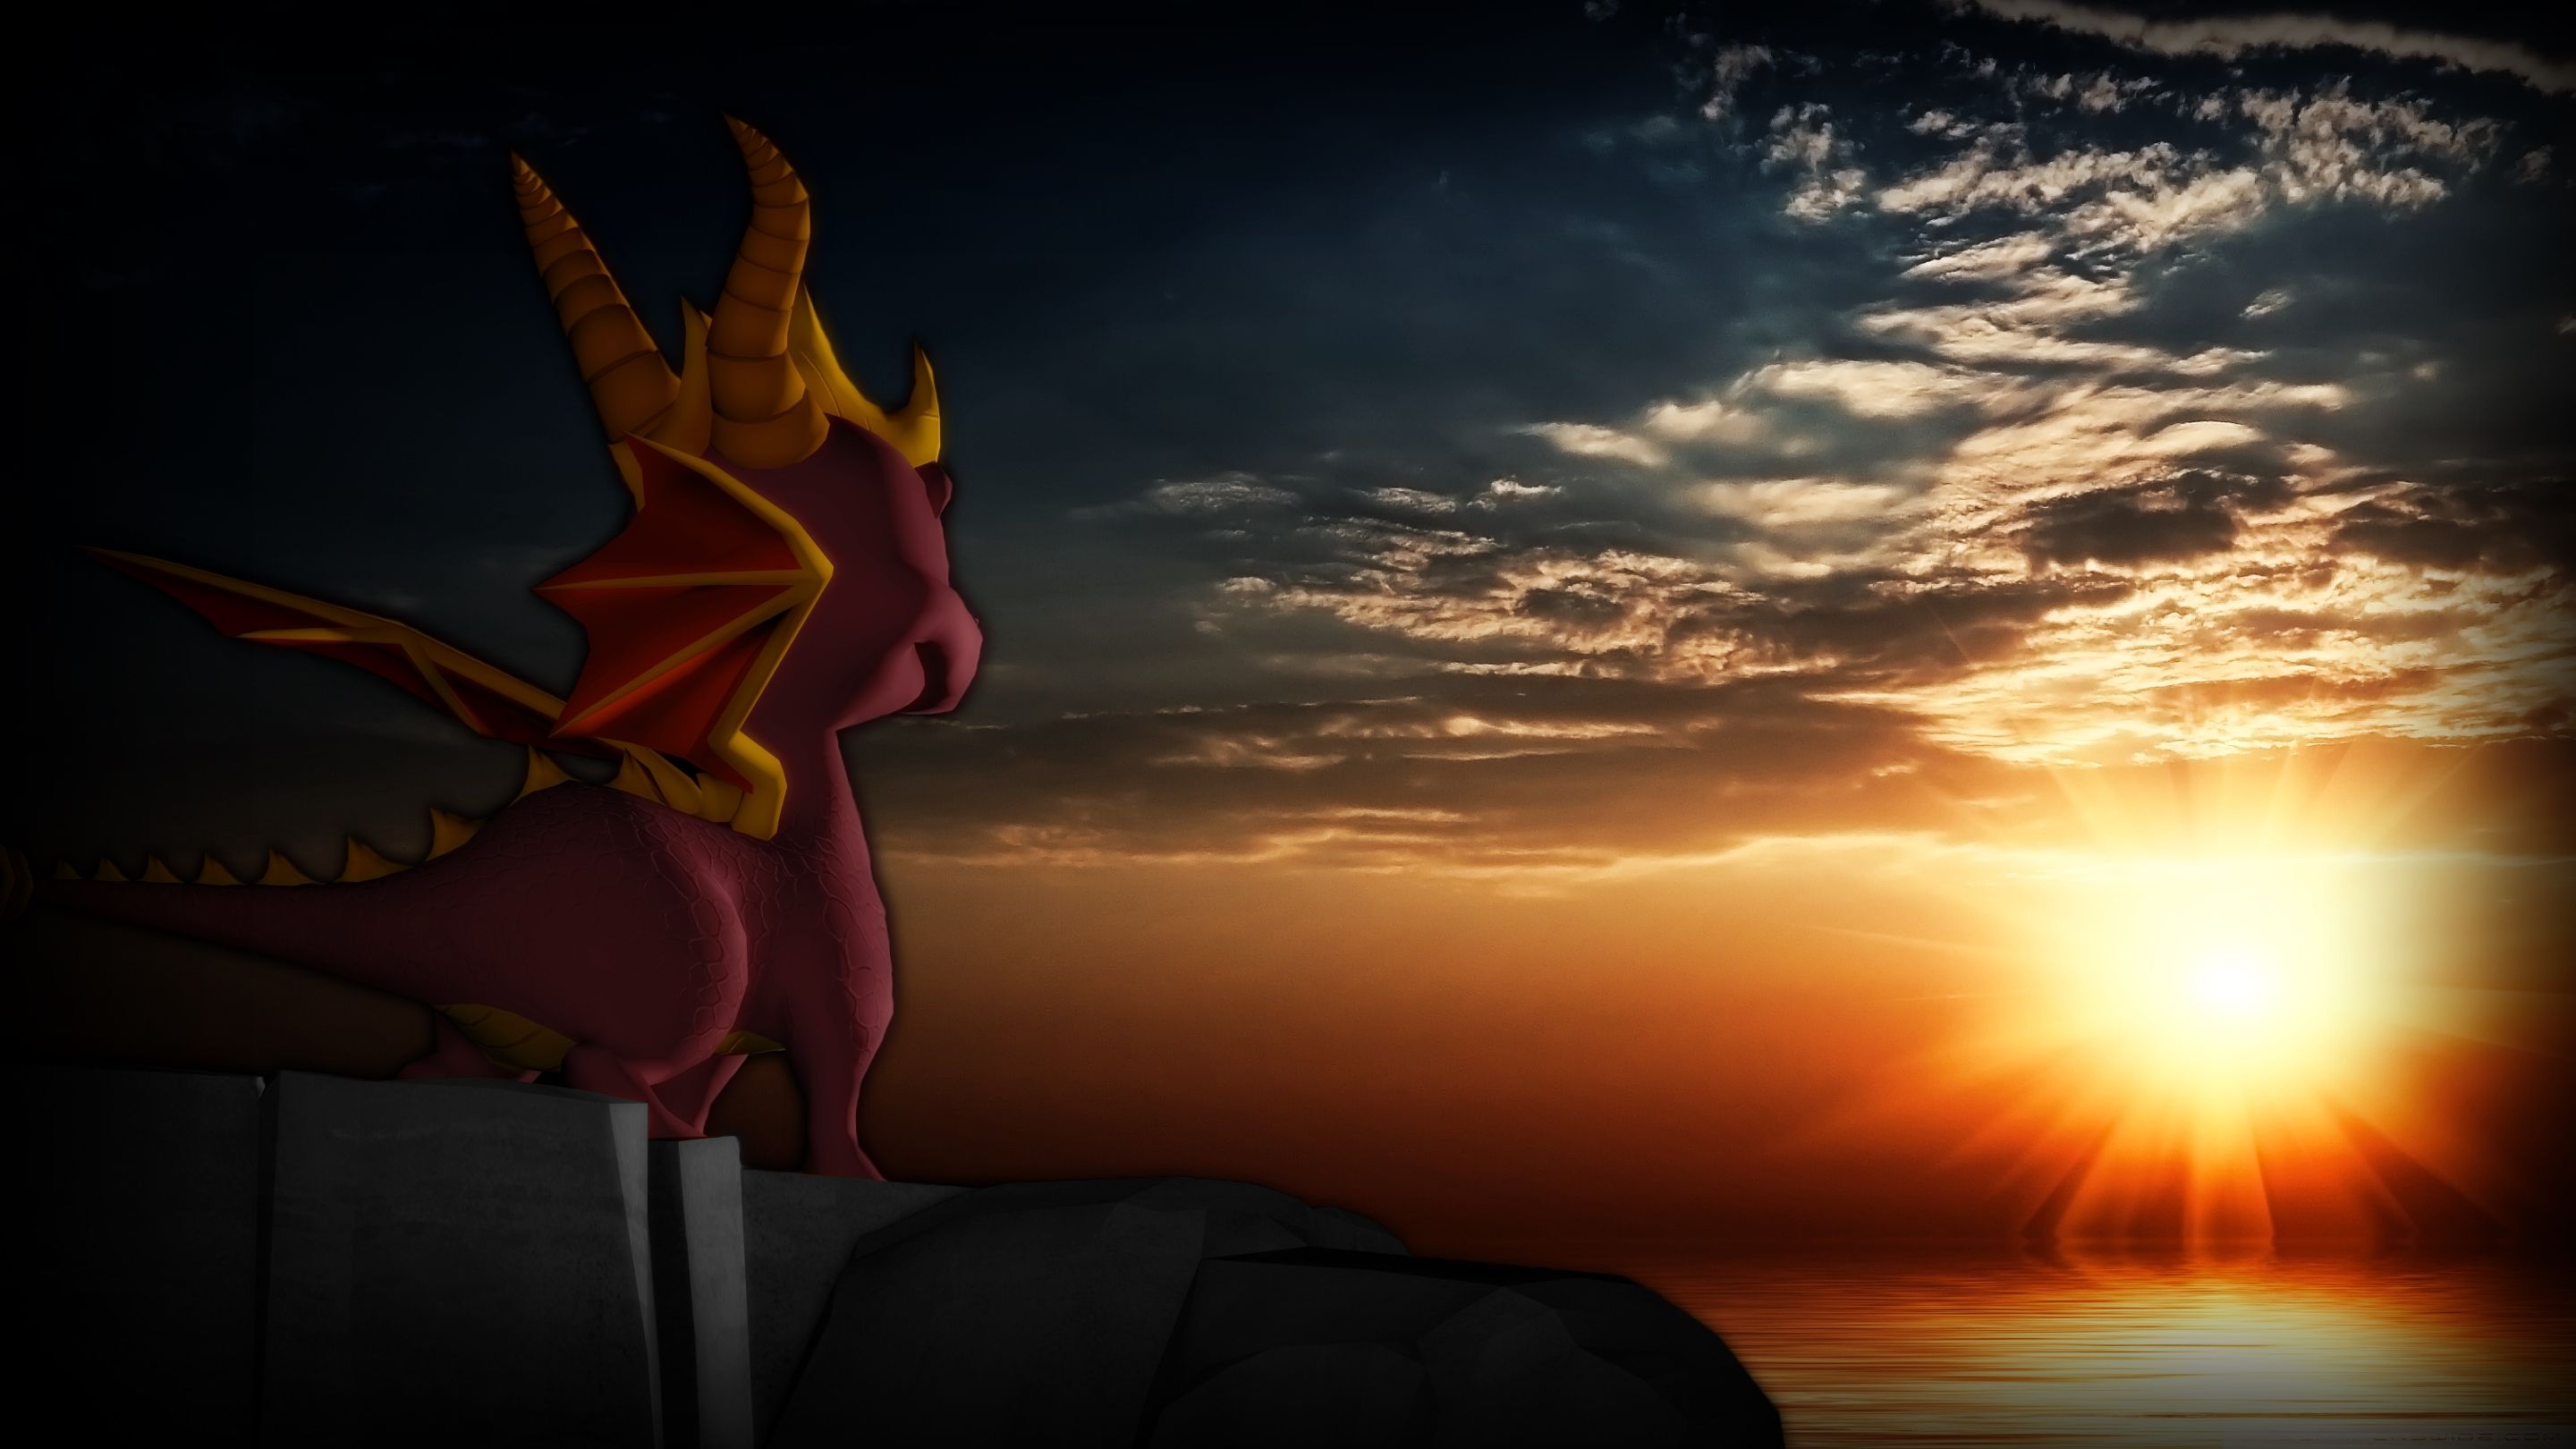 Spyro The Dragon Sunset Wallpaper by Cowboygineer on DeviantArt